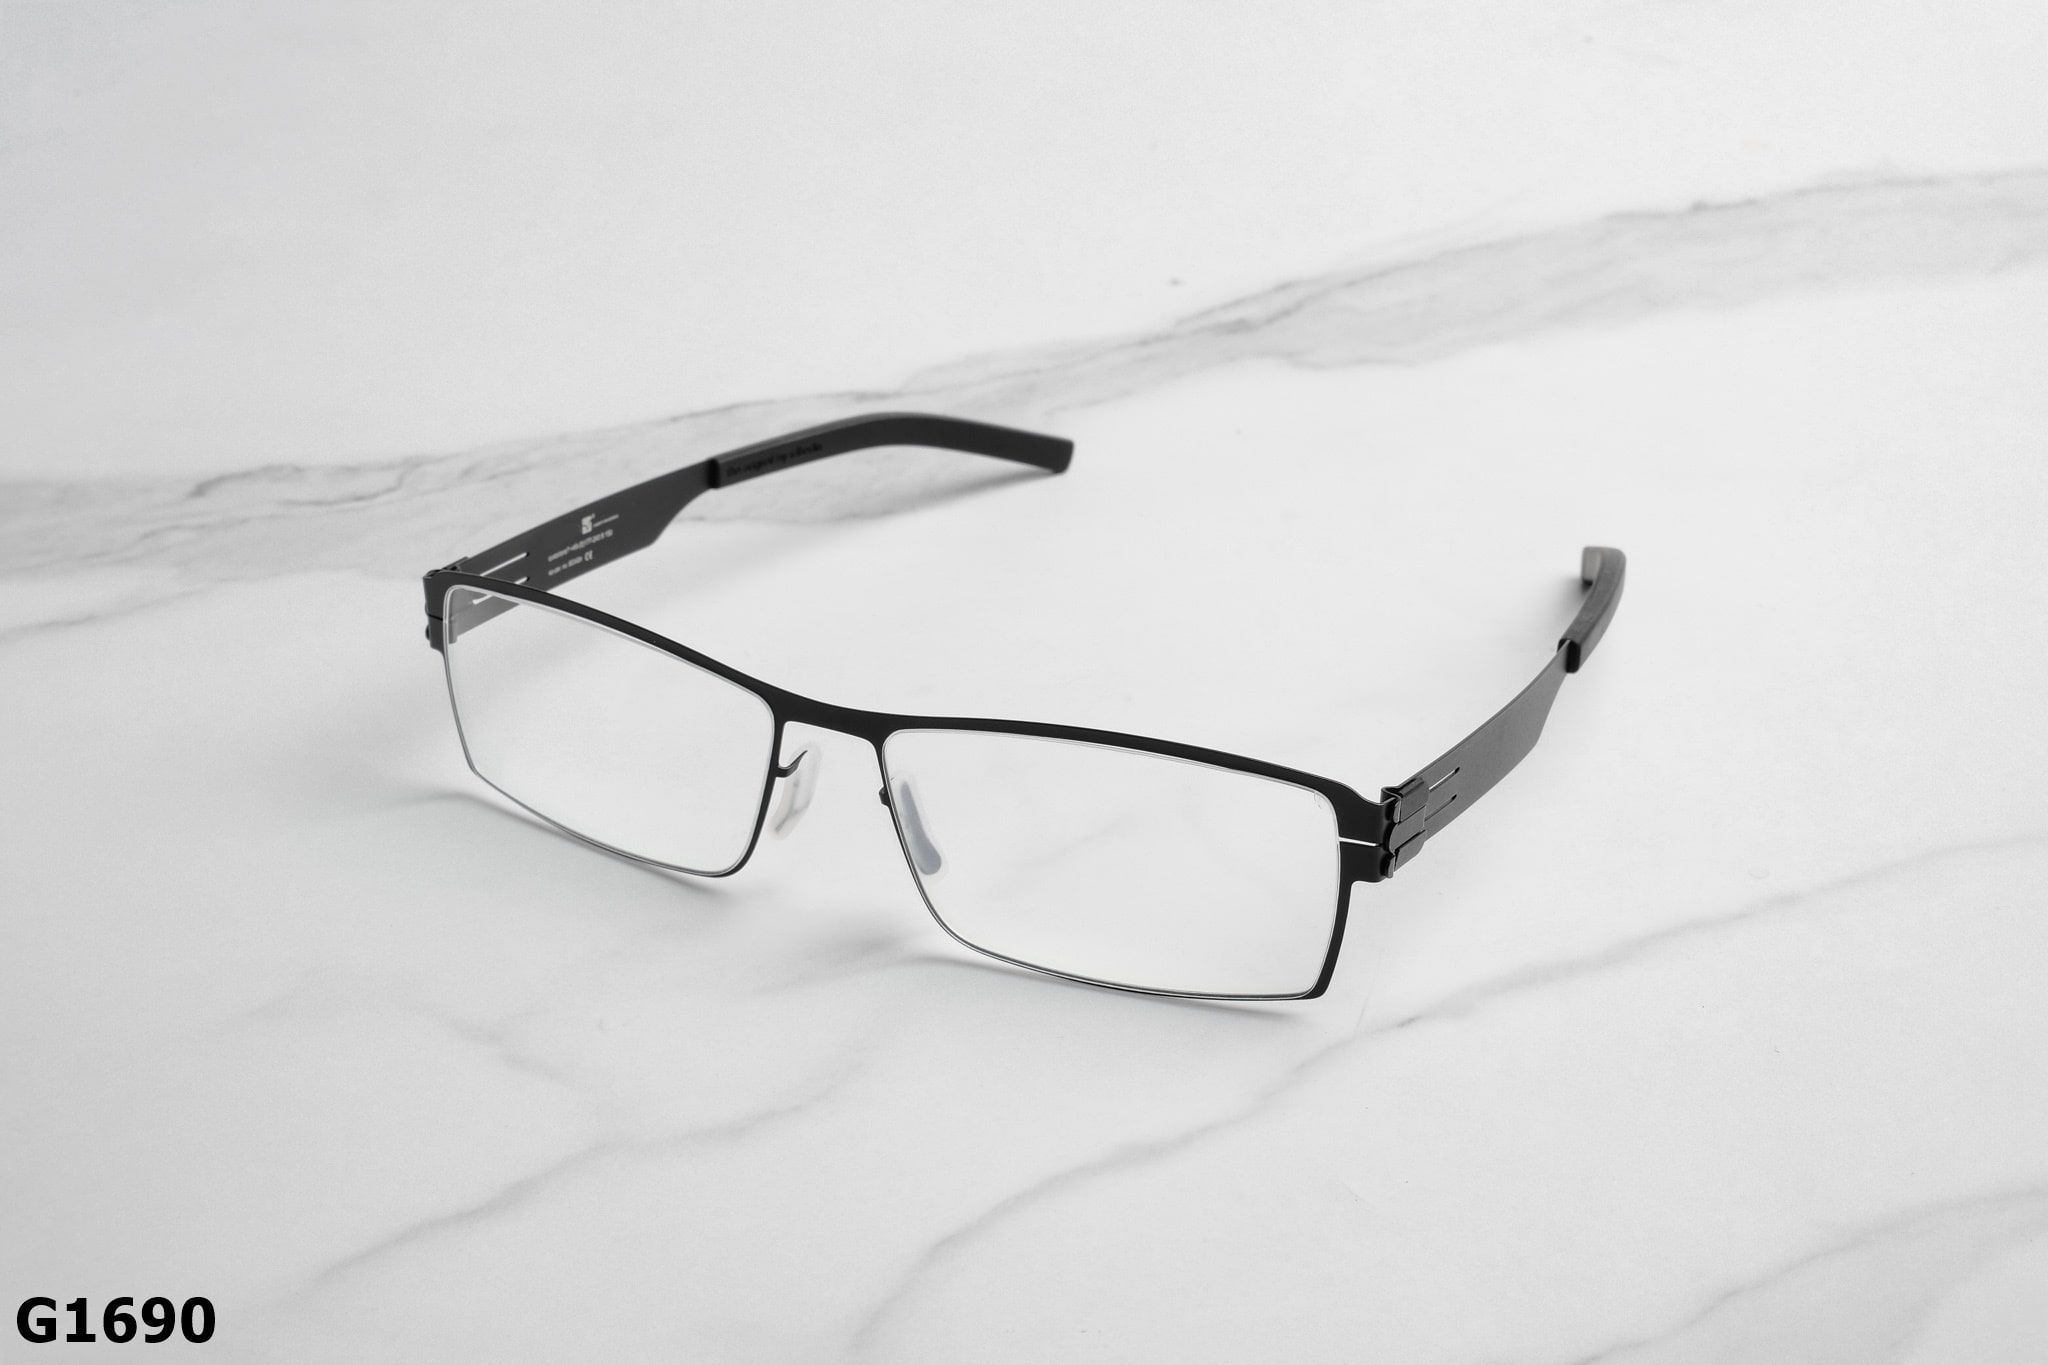  IC Eyewear - Glasses - G1690 